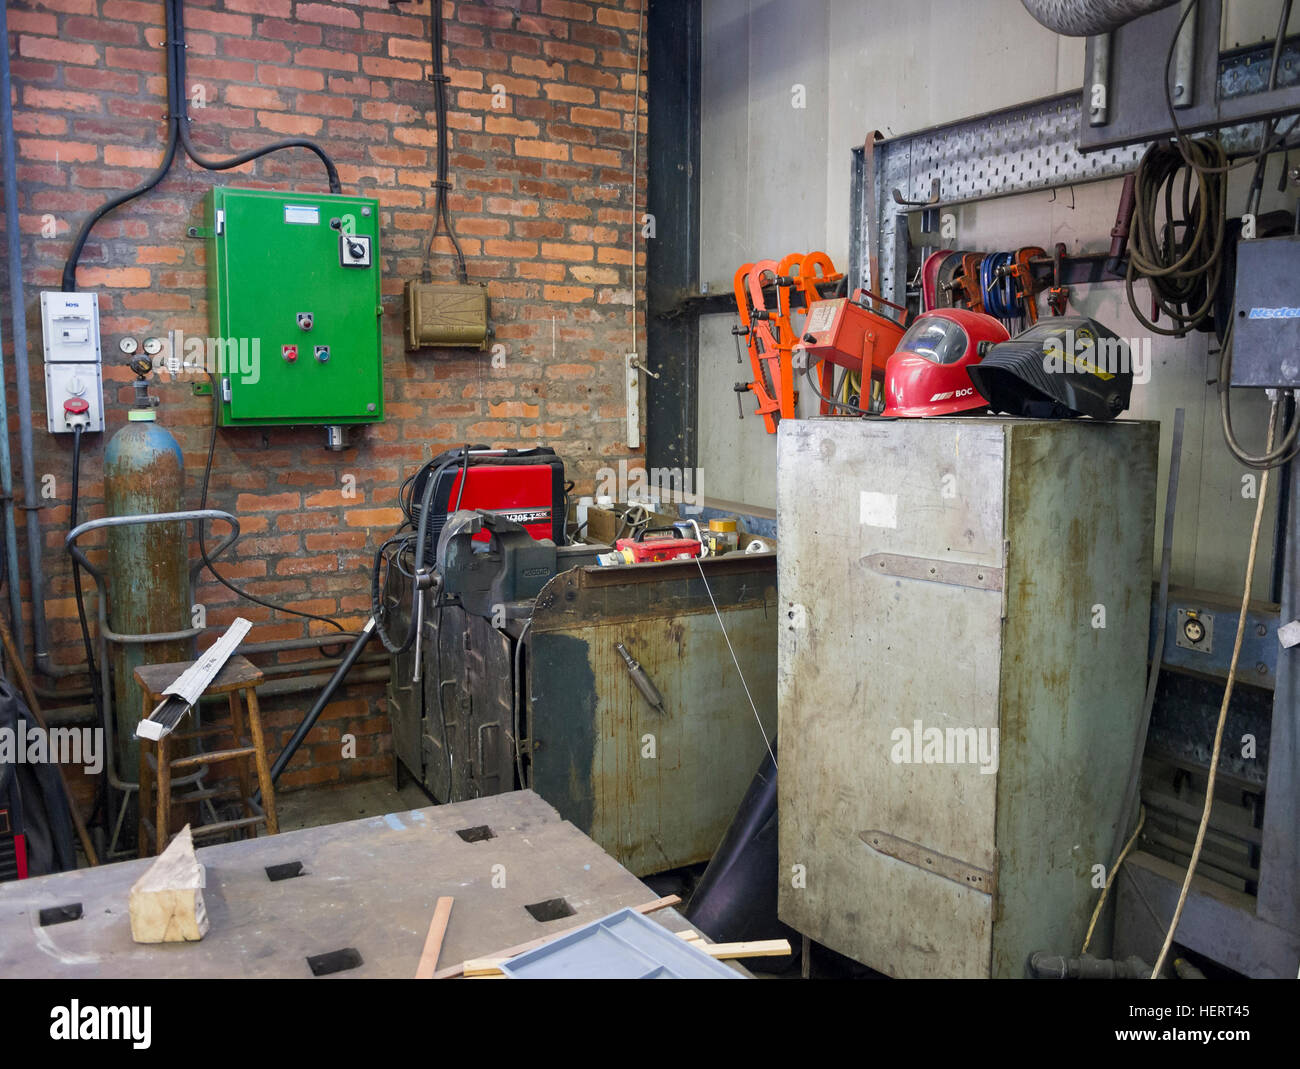 heavy engineering welding workshop tools and equipment Stock Photo